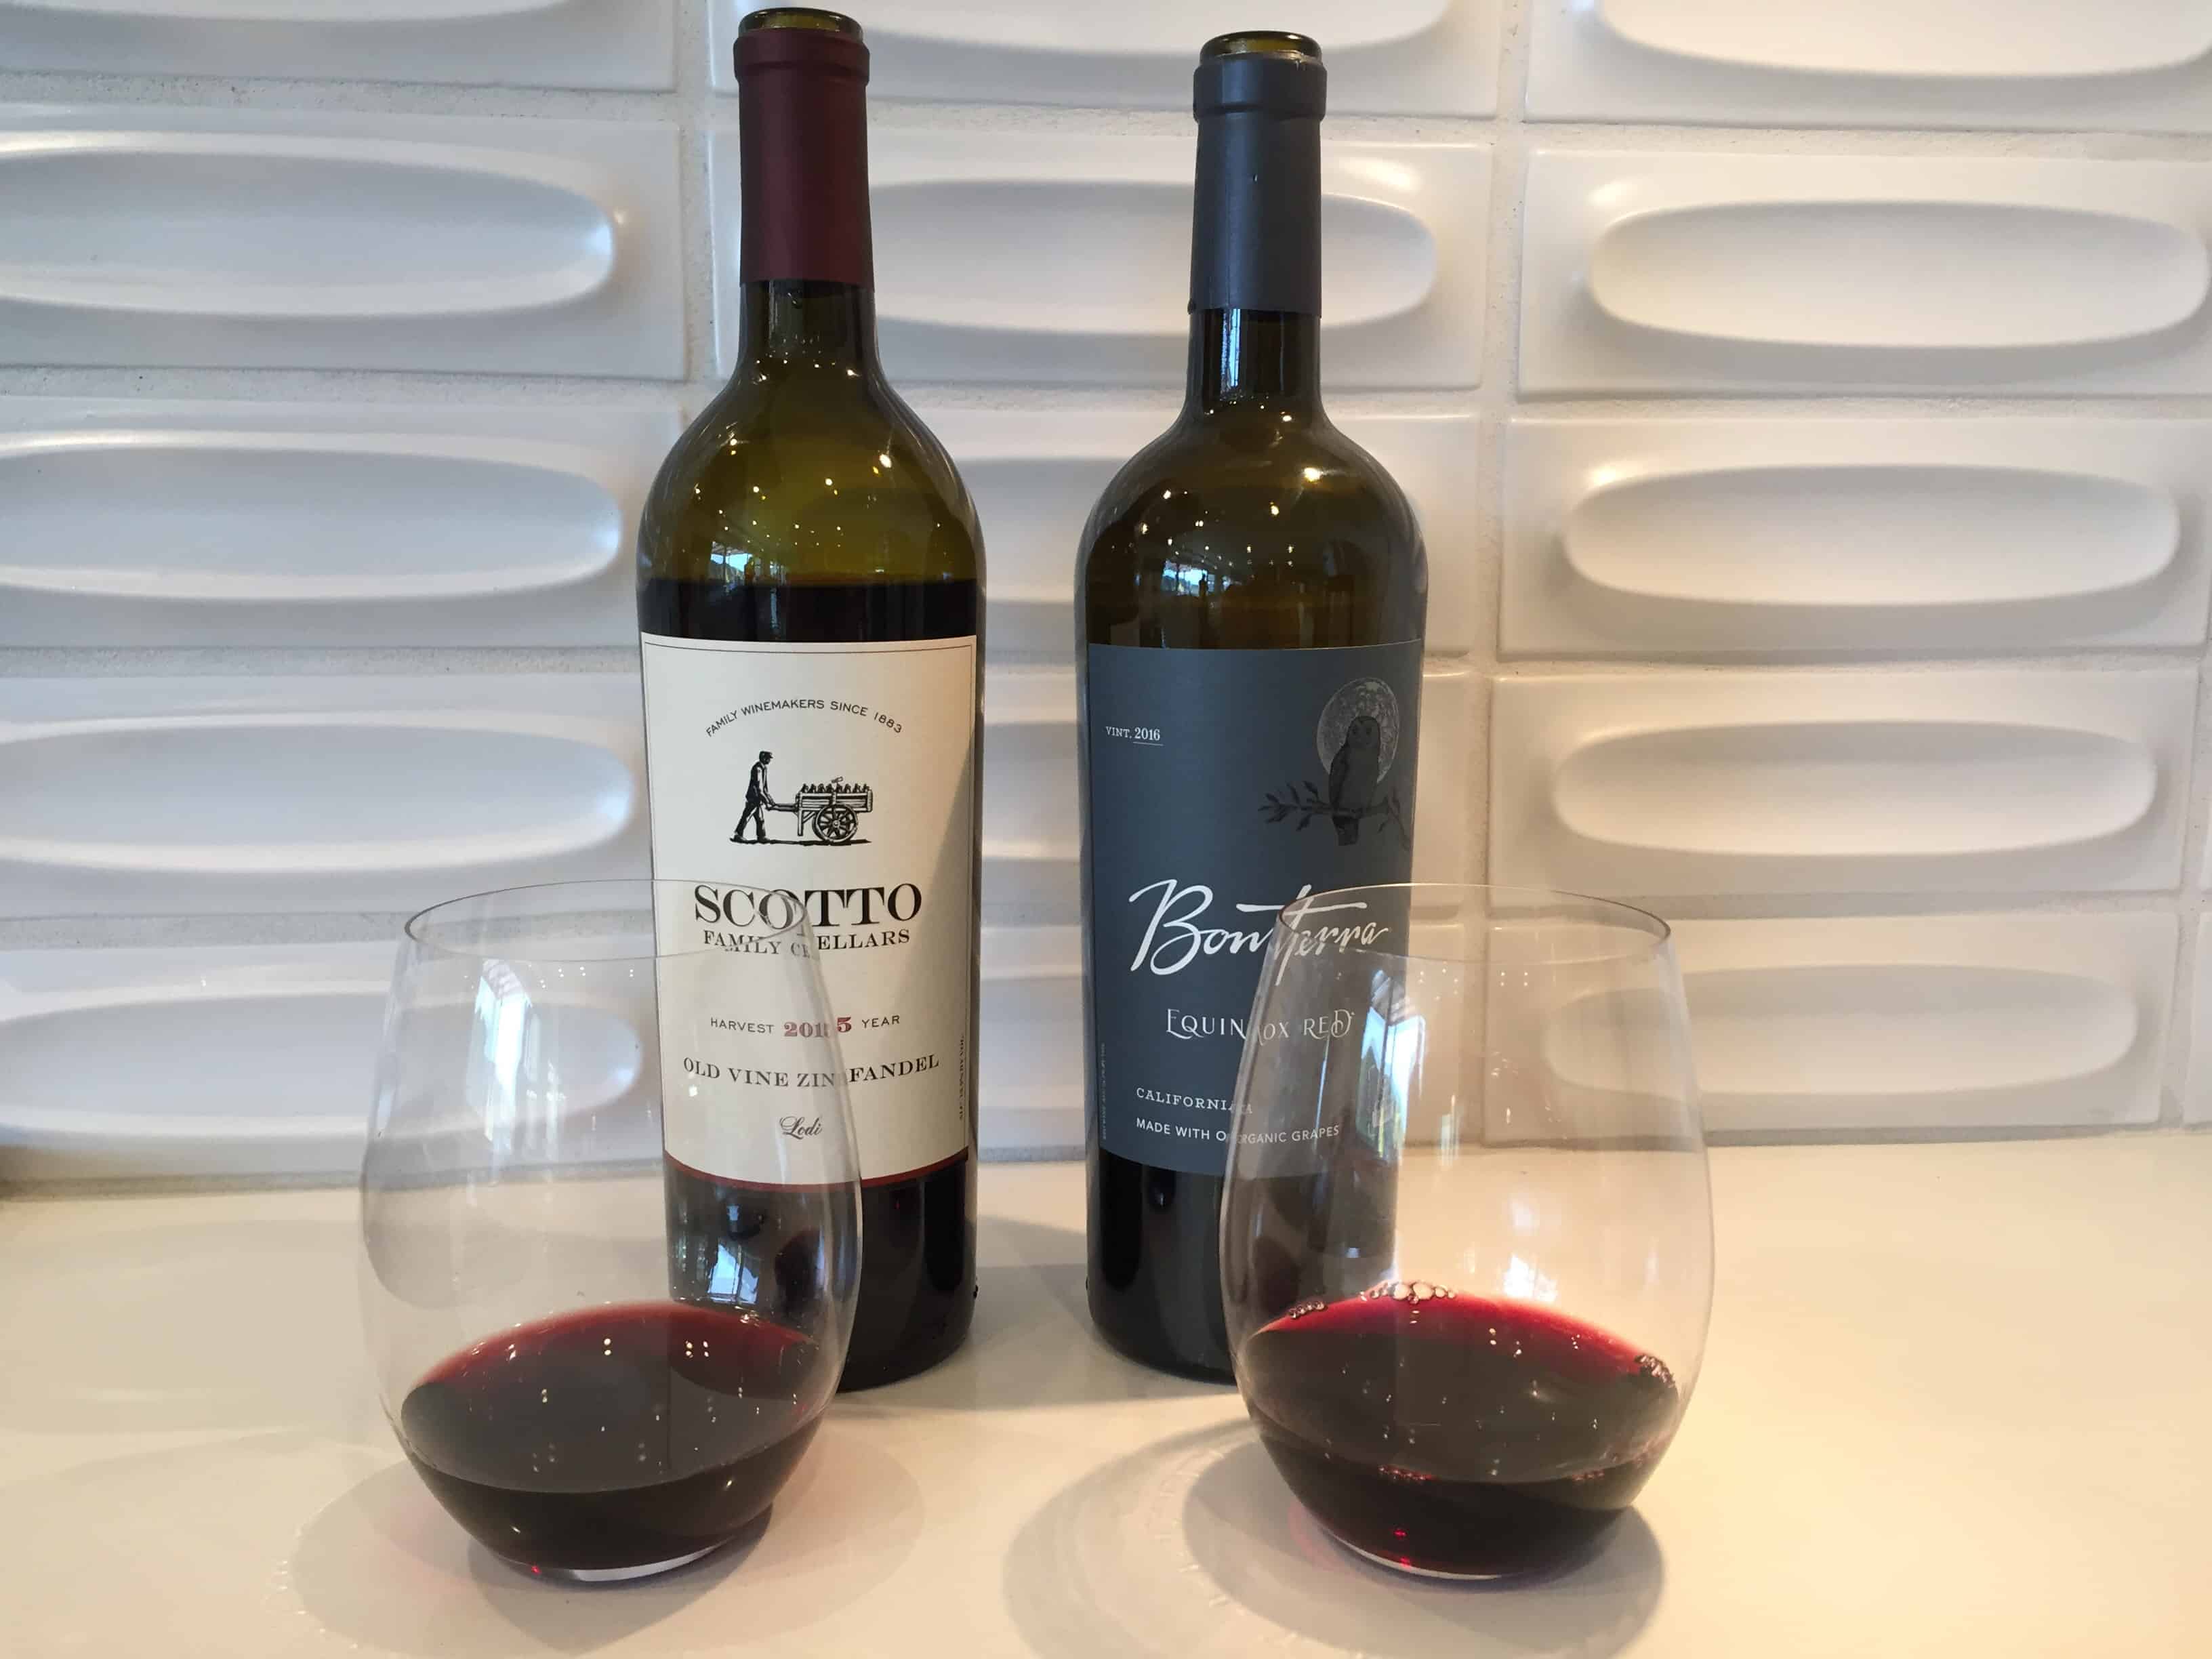 Bottles and glasses of Scotto Zinfandel and Bonterra red blend